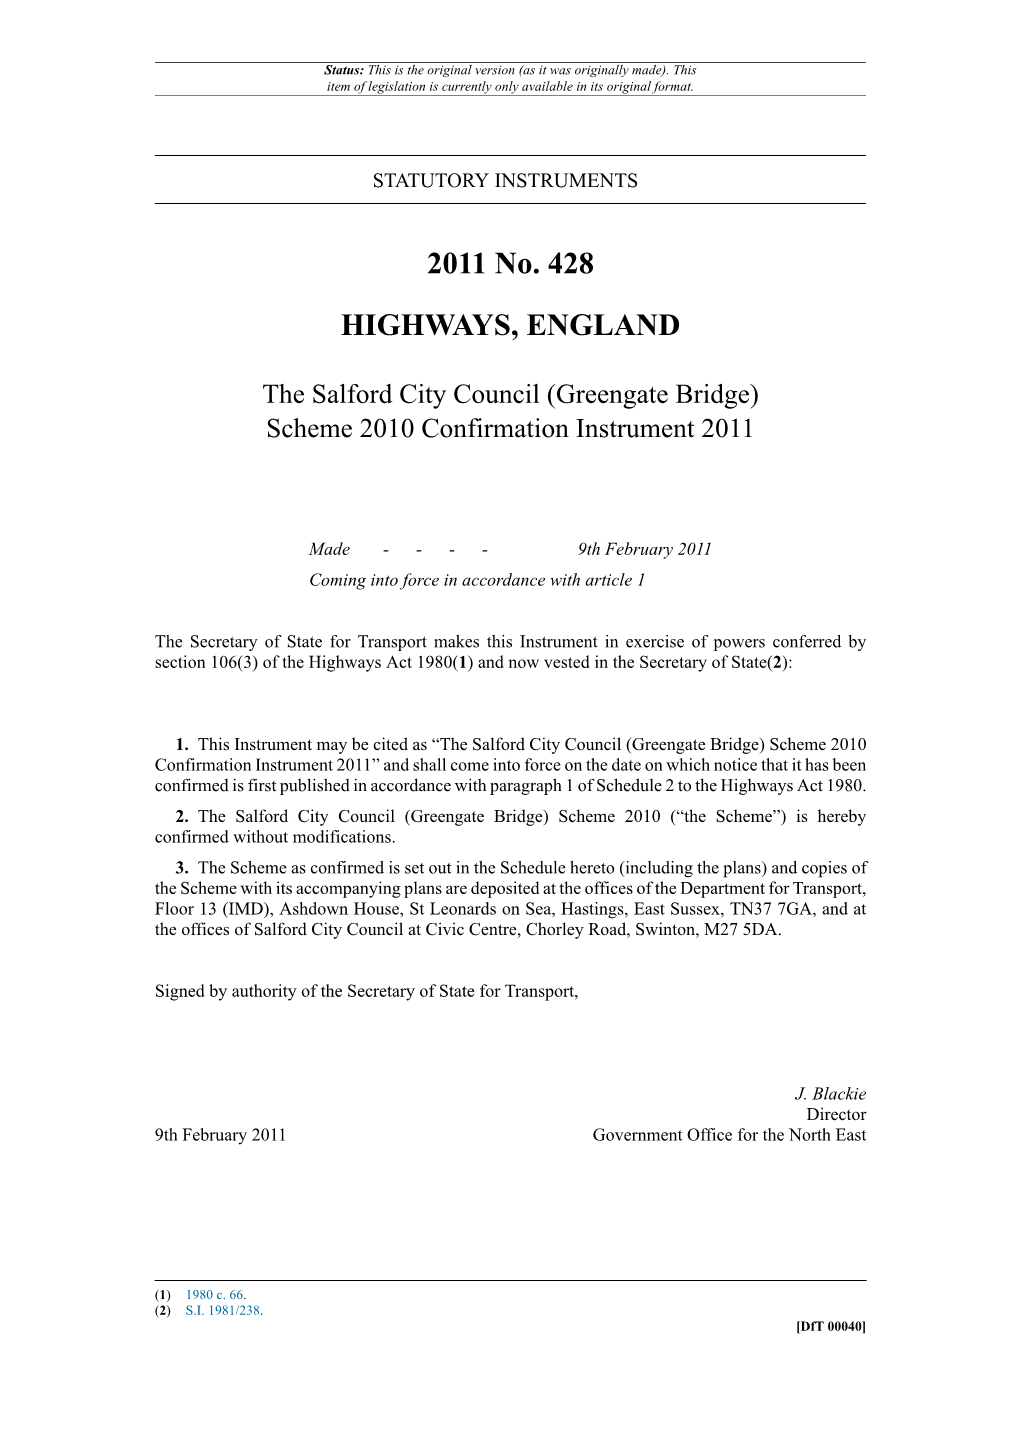 The Salford City Council (Greengate Bridge) Scheme 2010 Confirmation Instrument 2011